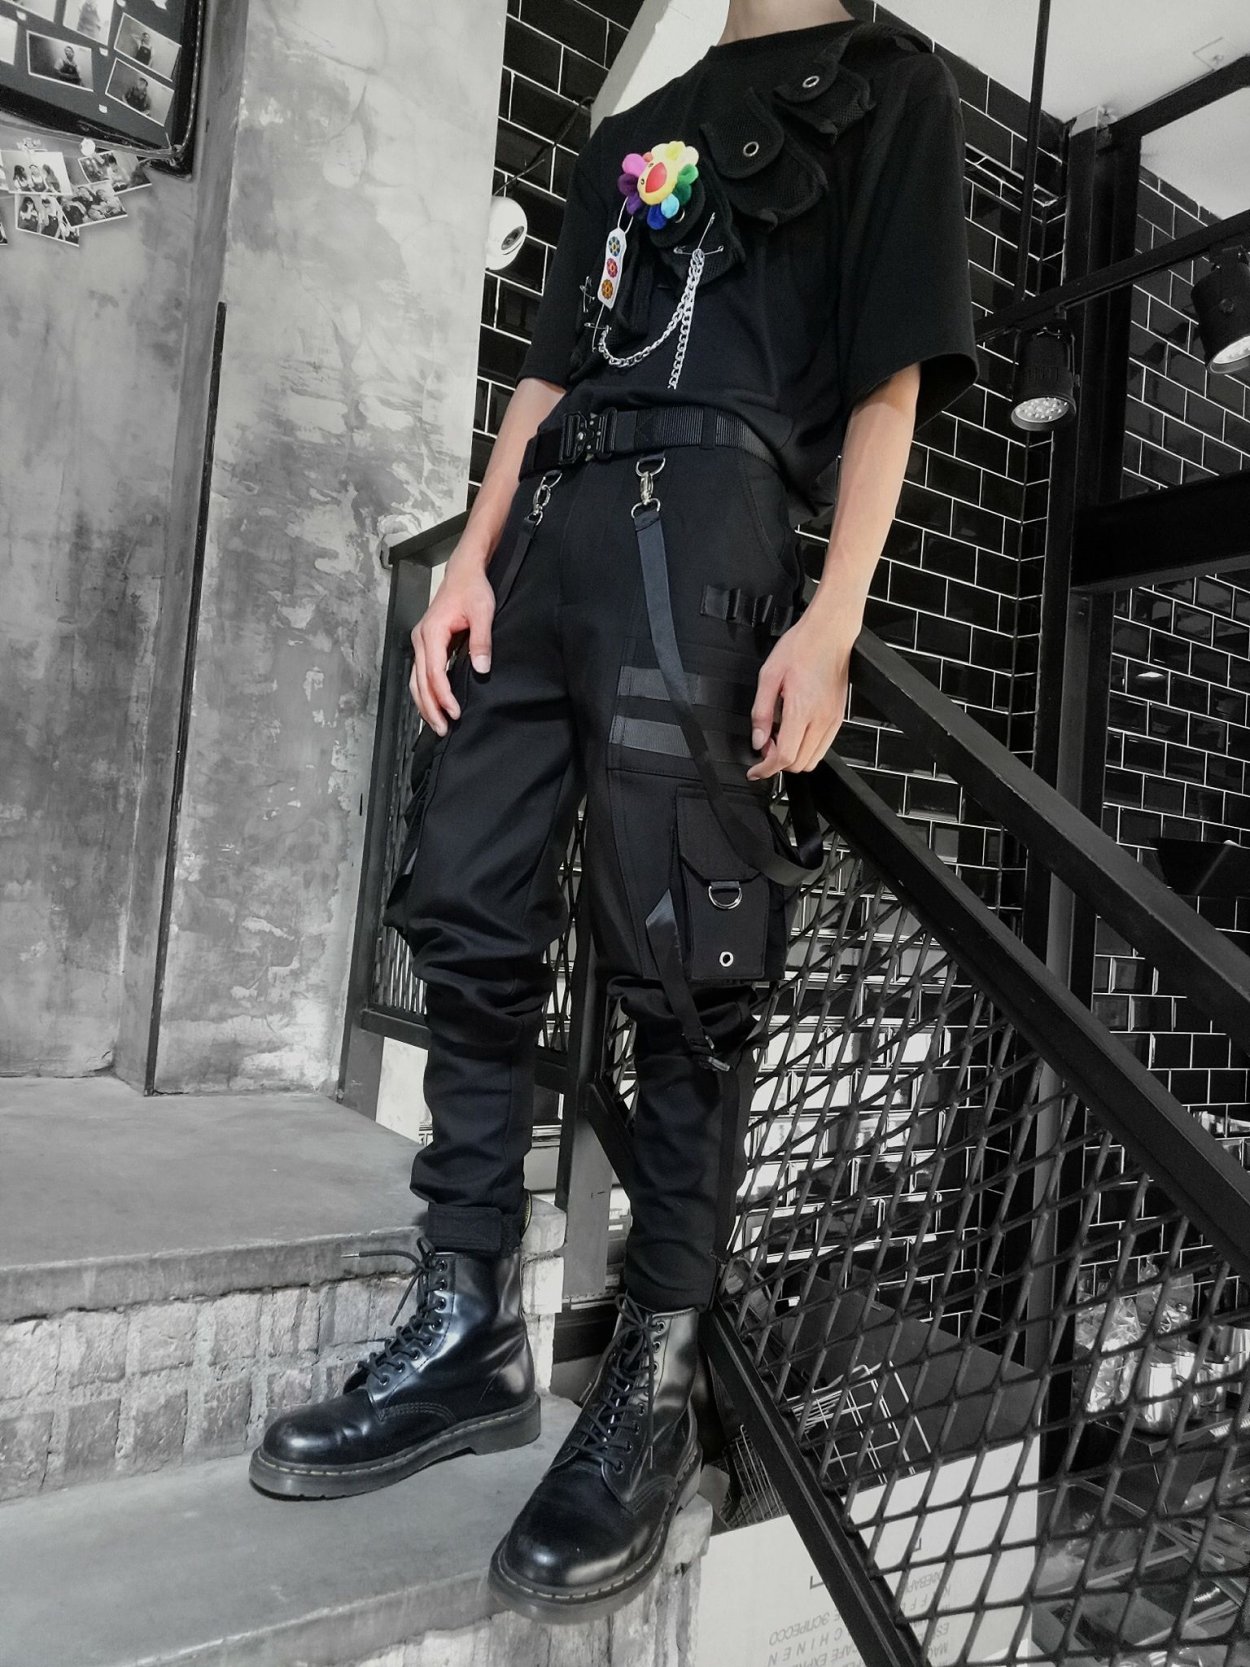 Goth outfit Грандж 2020 корейская одежда